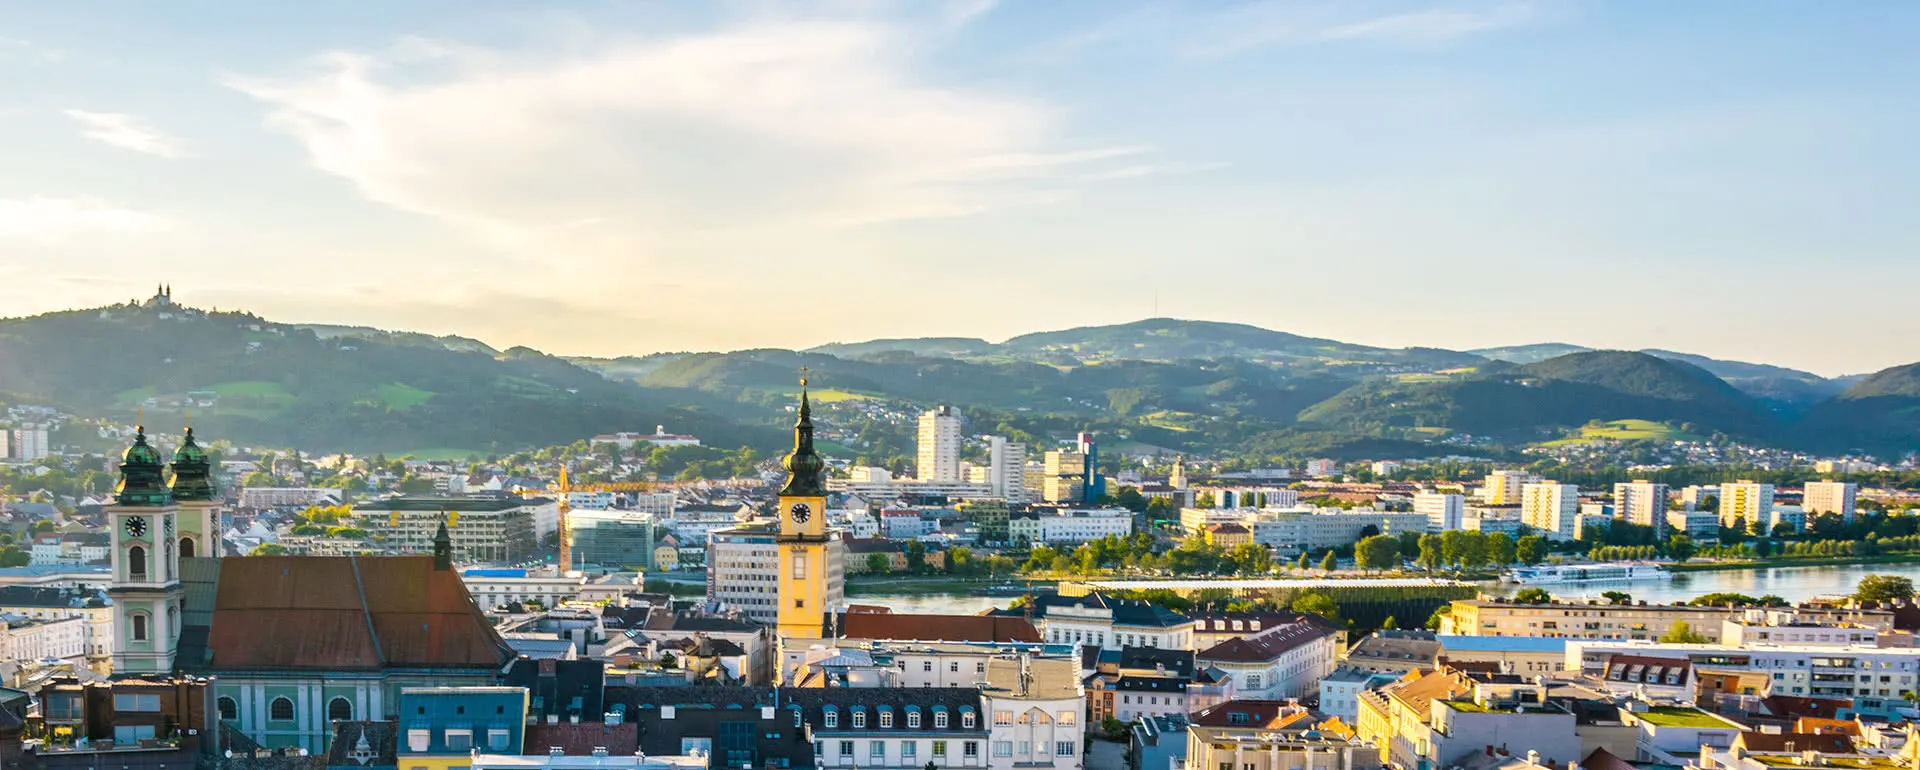 Linz - the destination for company trips